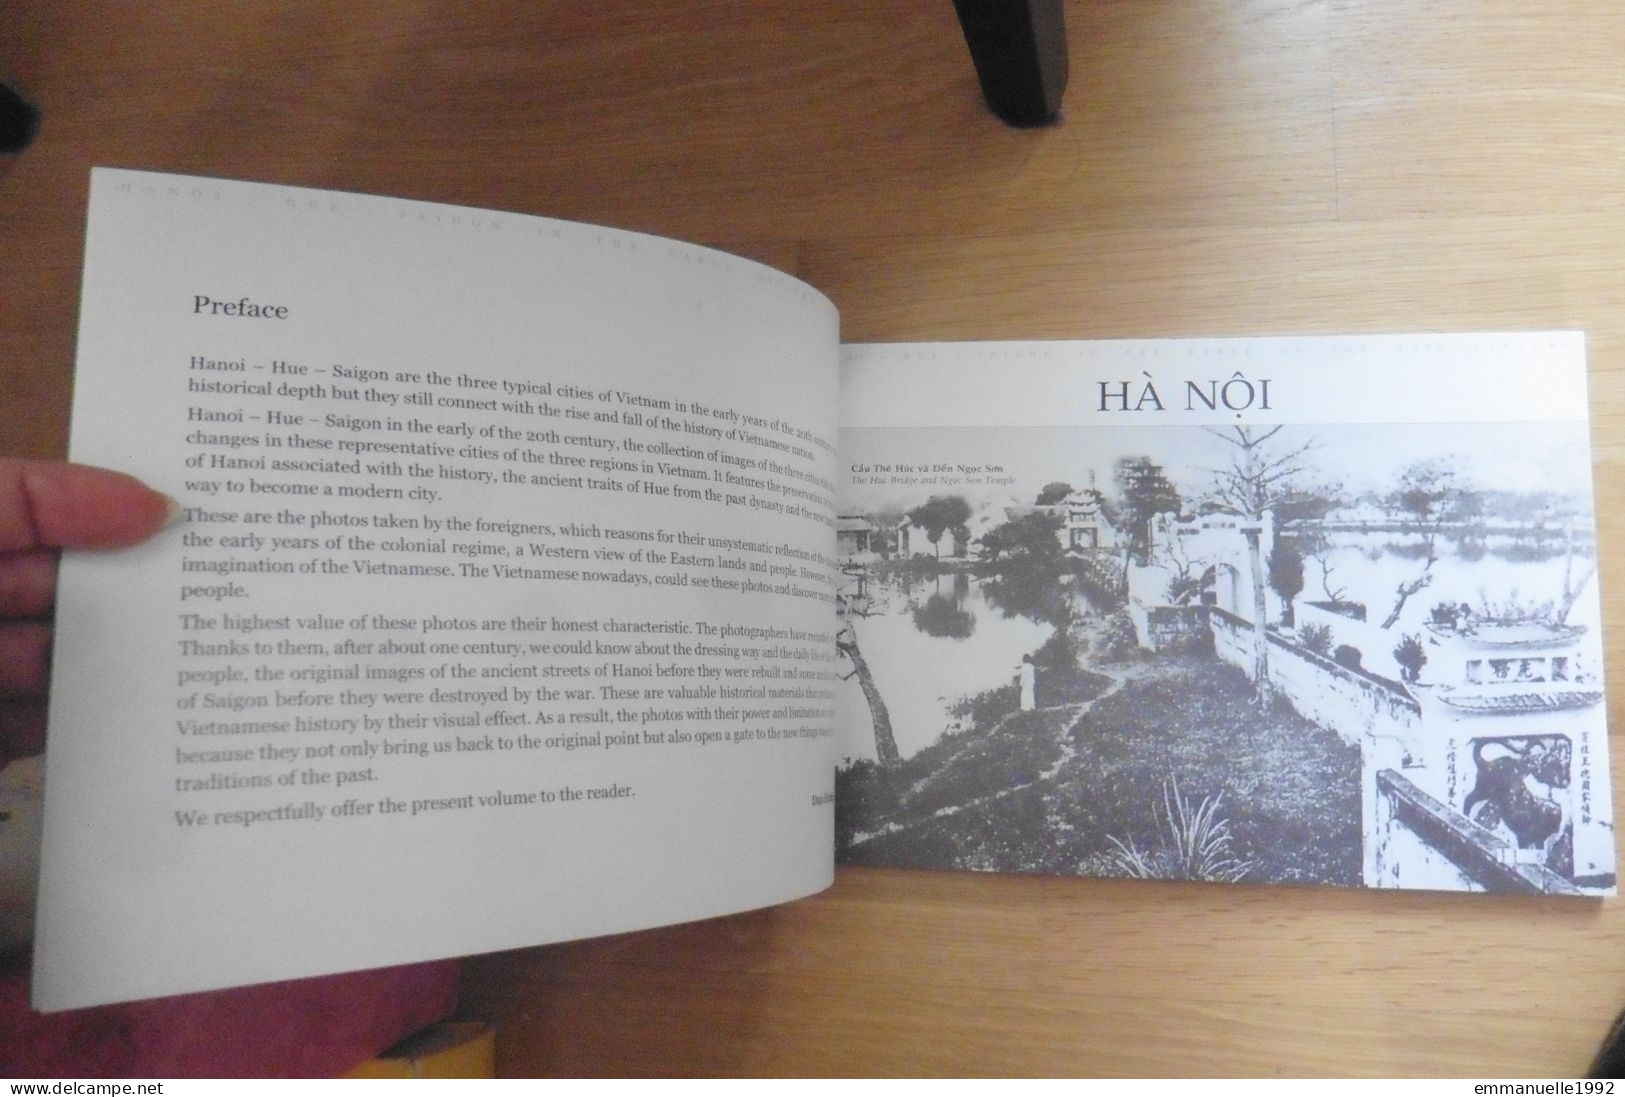 Hanoi Huê Saigon in the early of the 20th century photos & postcards - livre de cartes postales anciennes Indochine